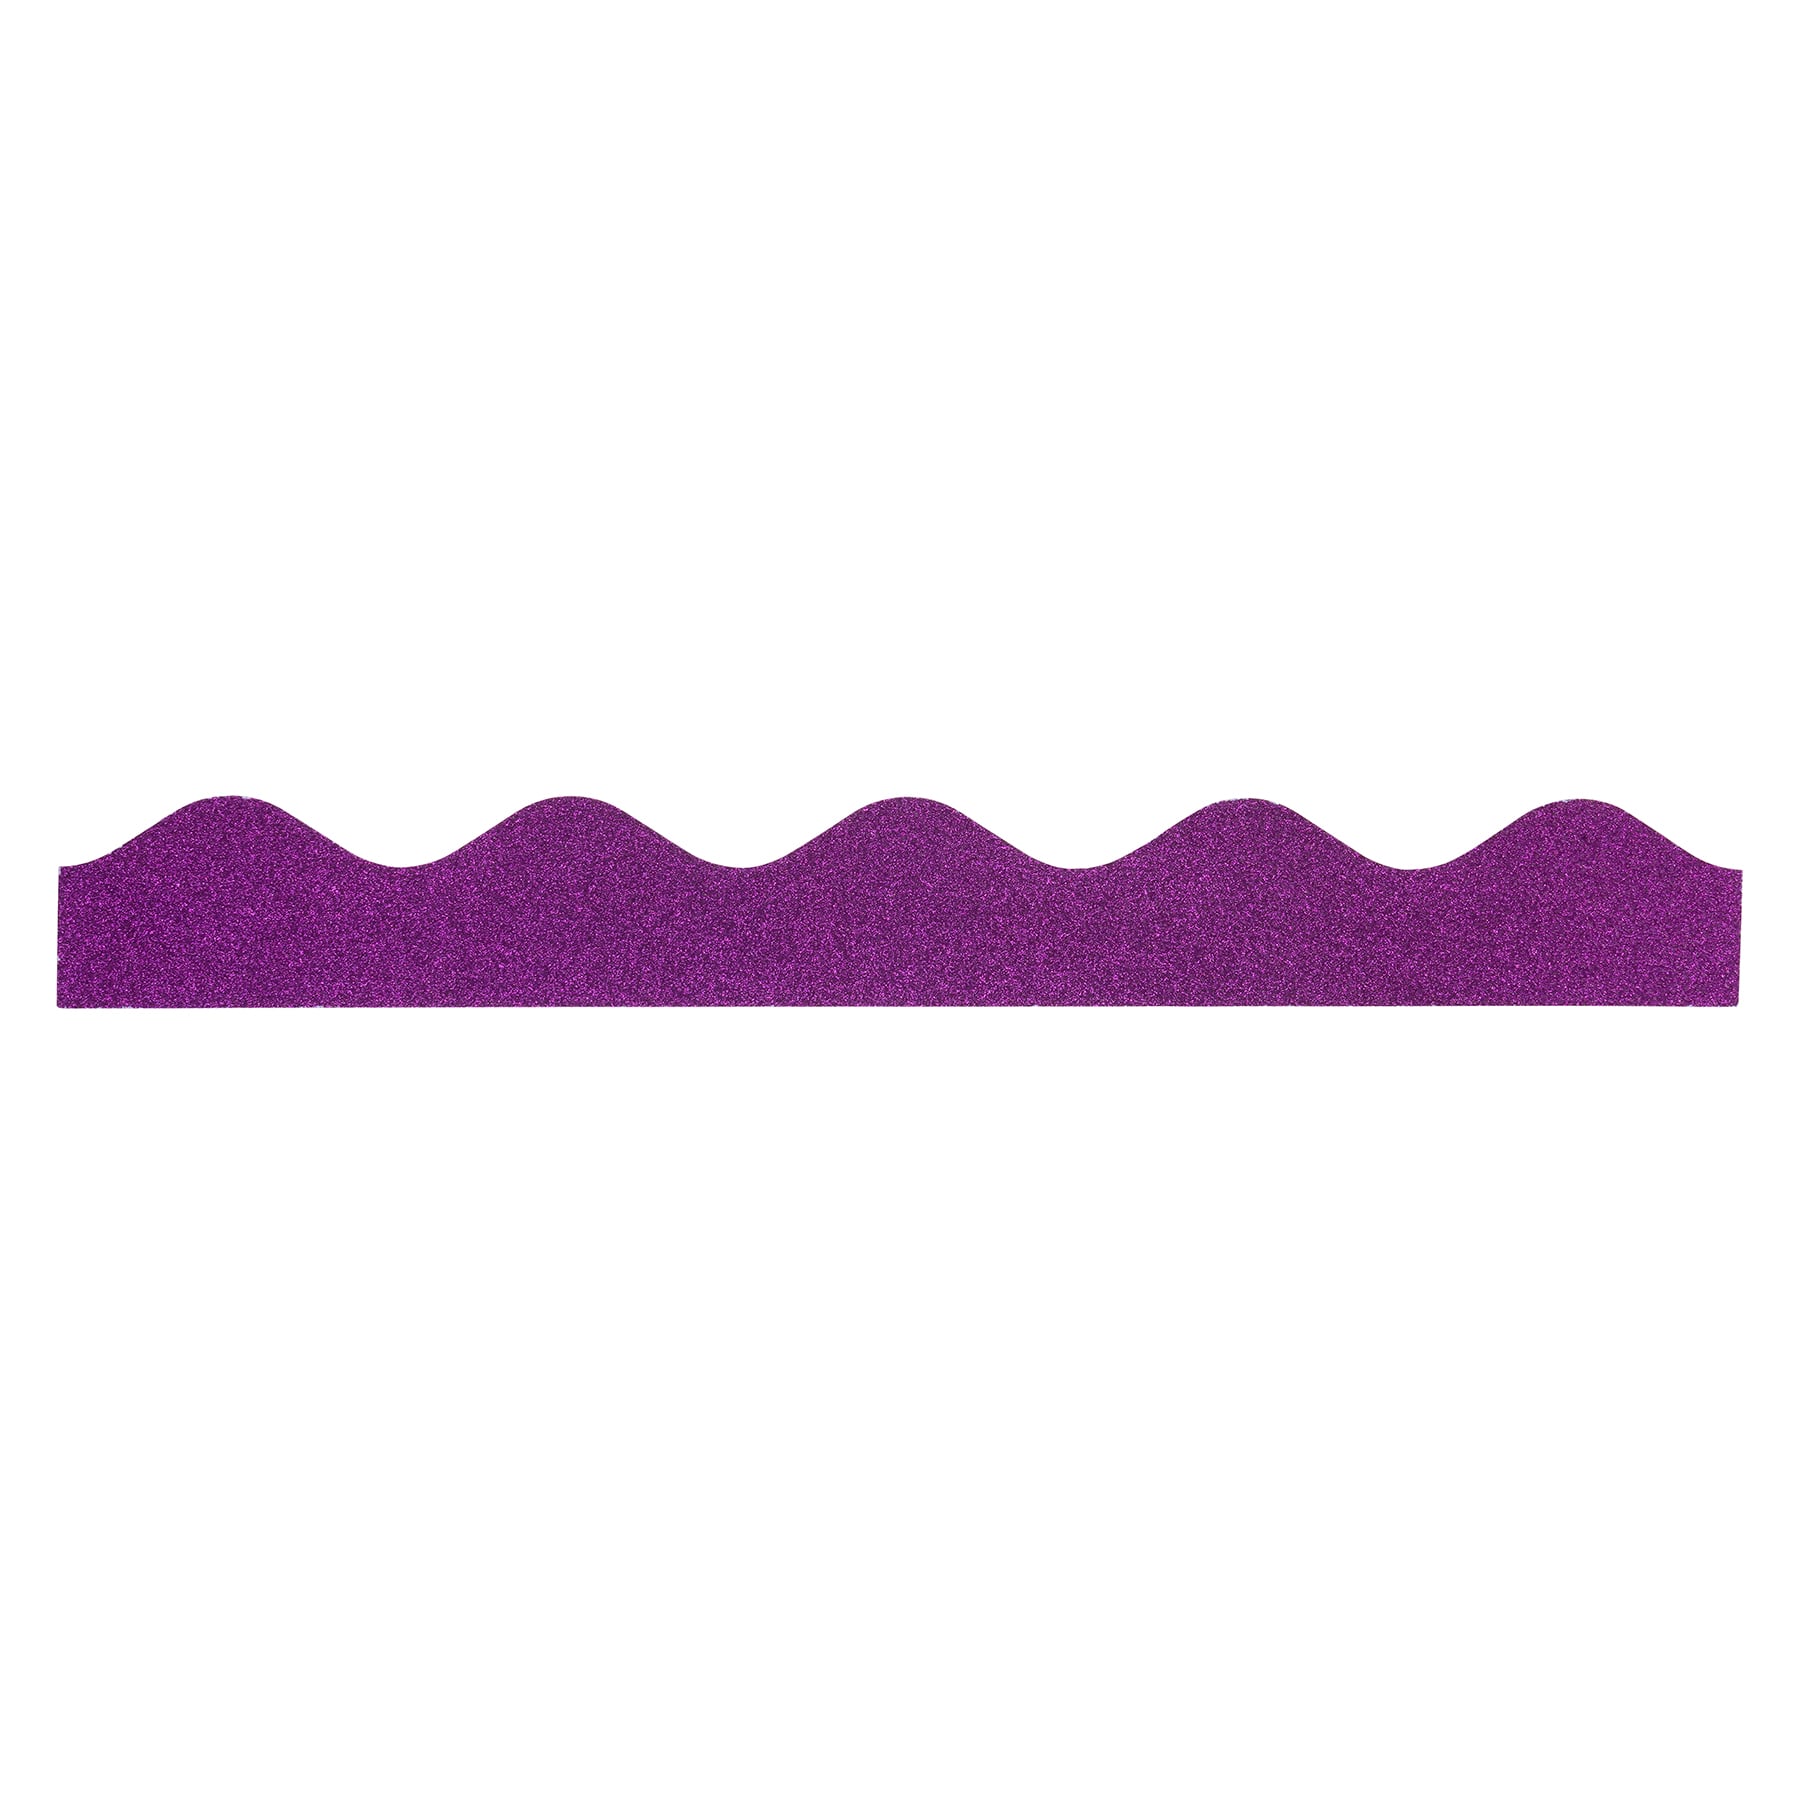 purple swirl border